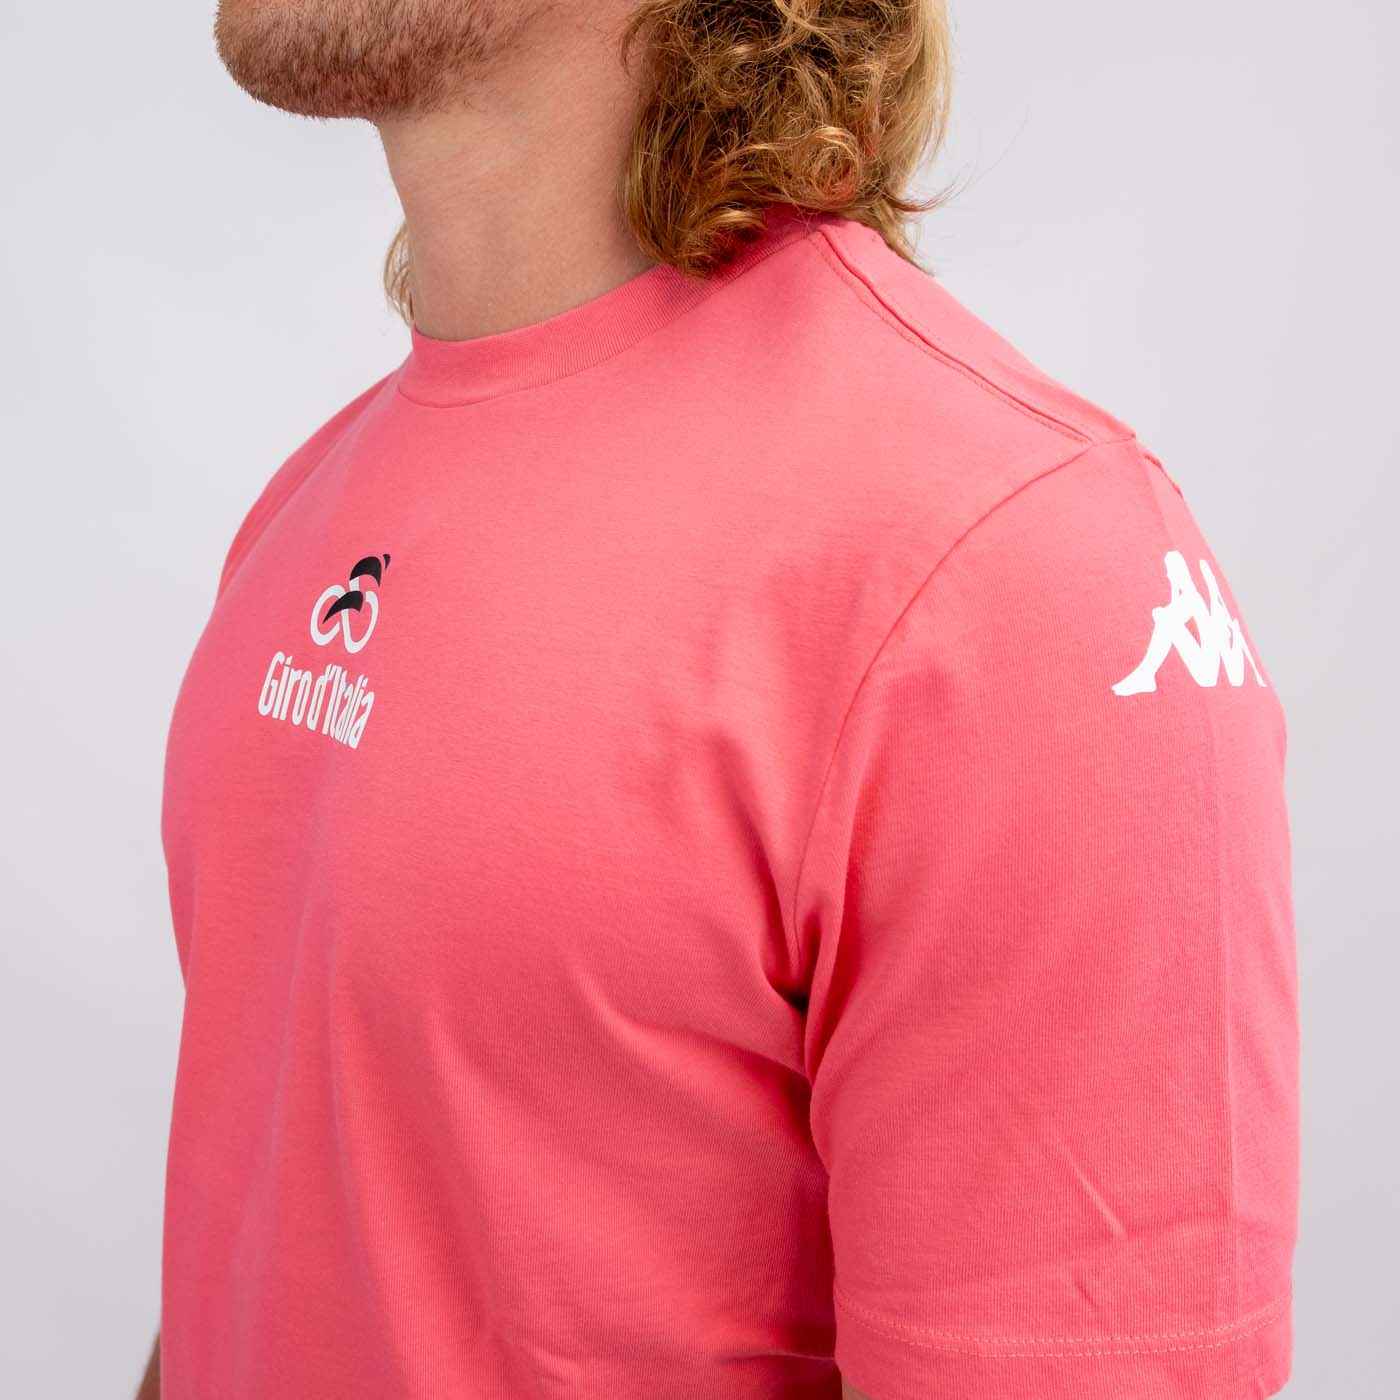 T-Shirt Giro d'Italia - Rosa